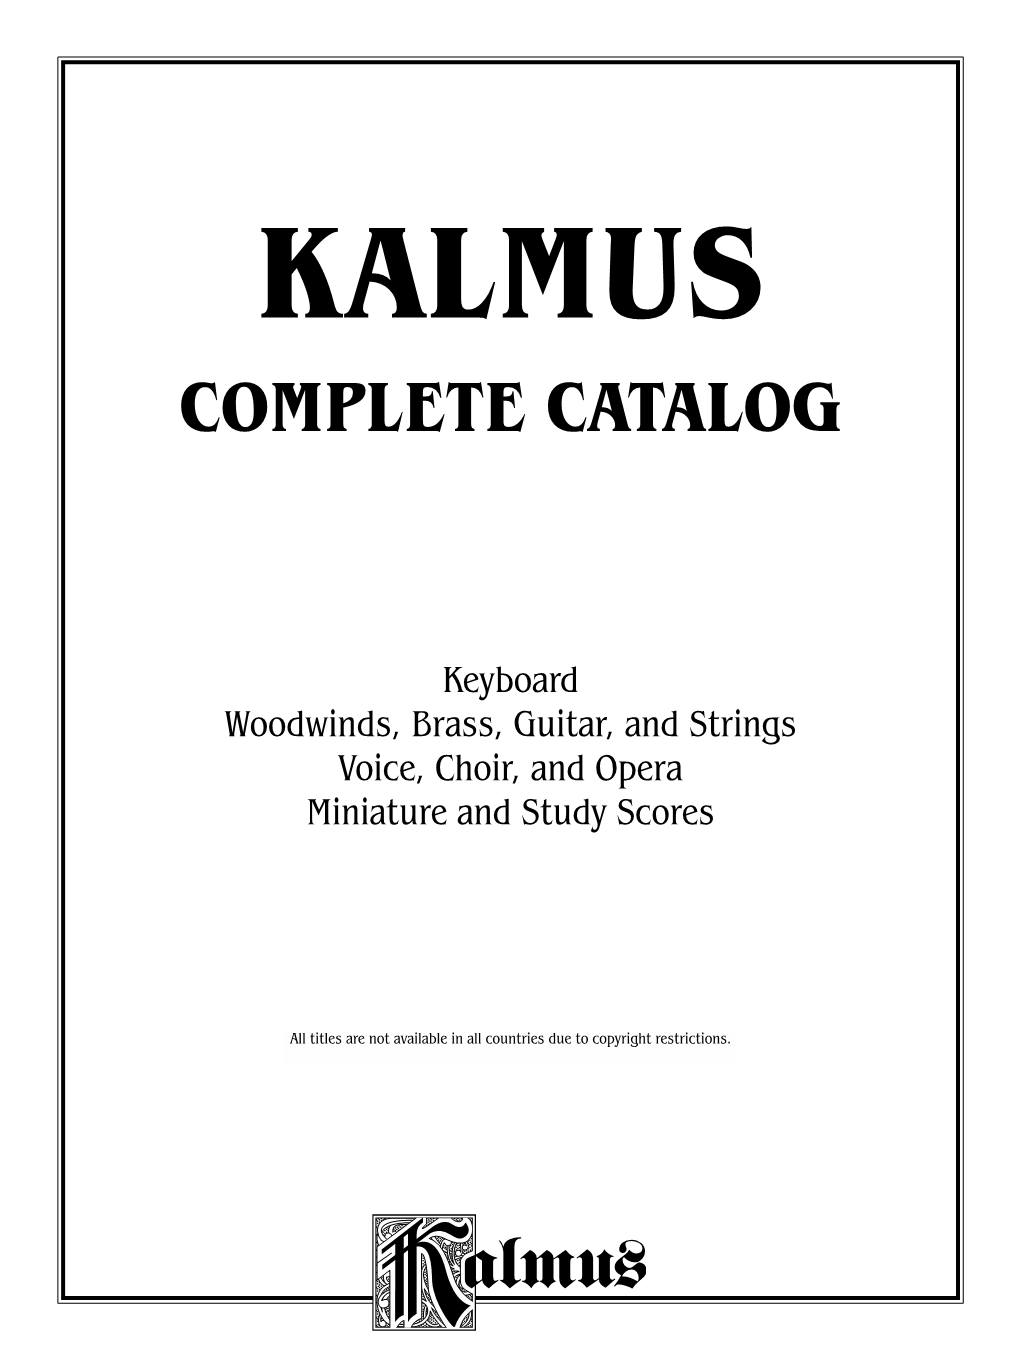 Complete Catalog